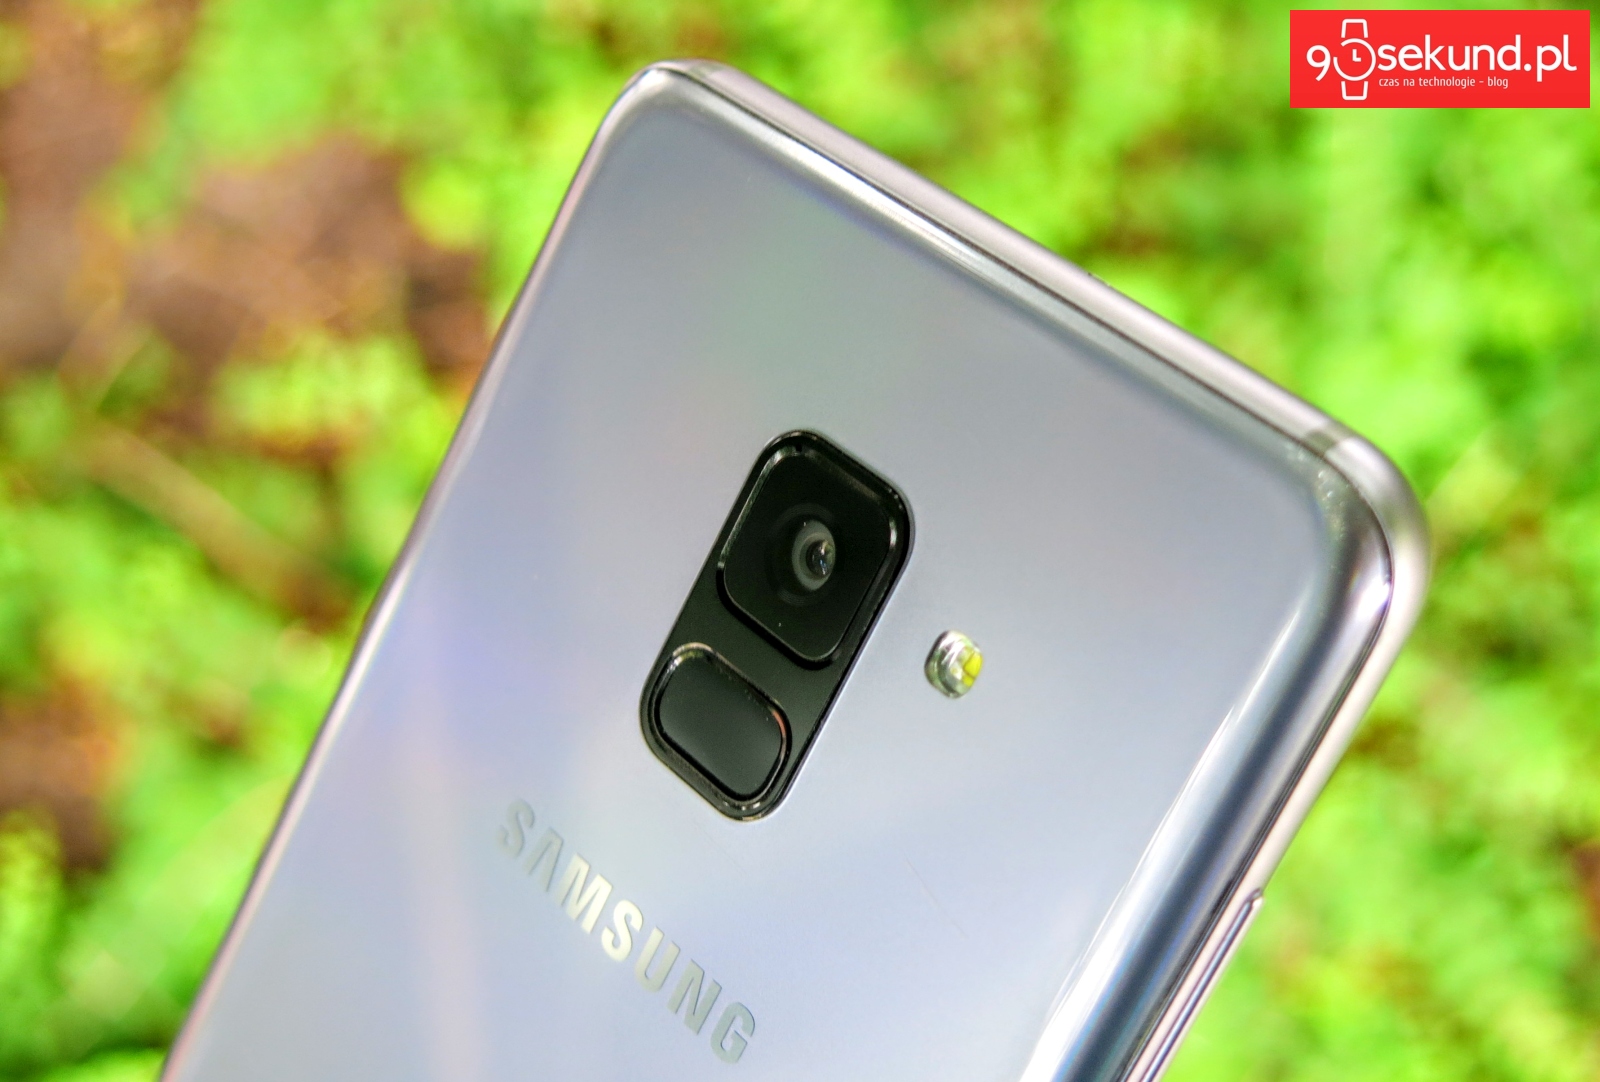 Recenzja Samsunga Galaxy A8 (SM-A530F) - 90sekund.pl